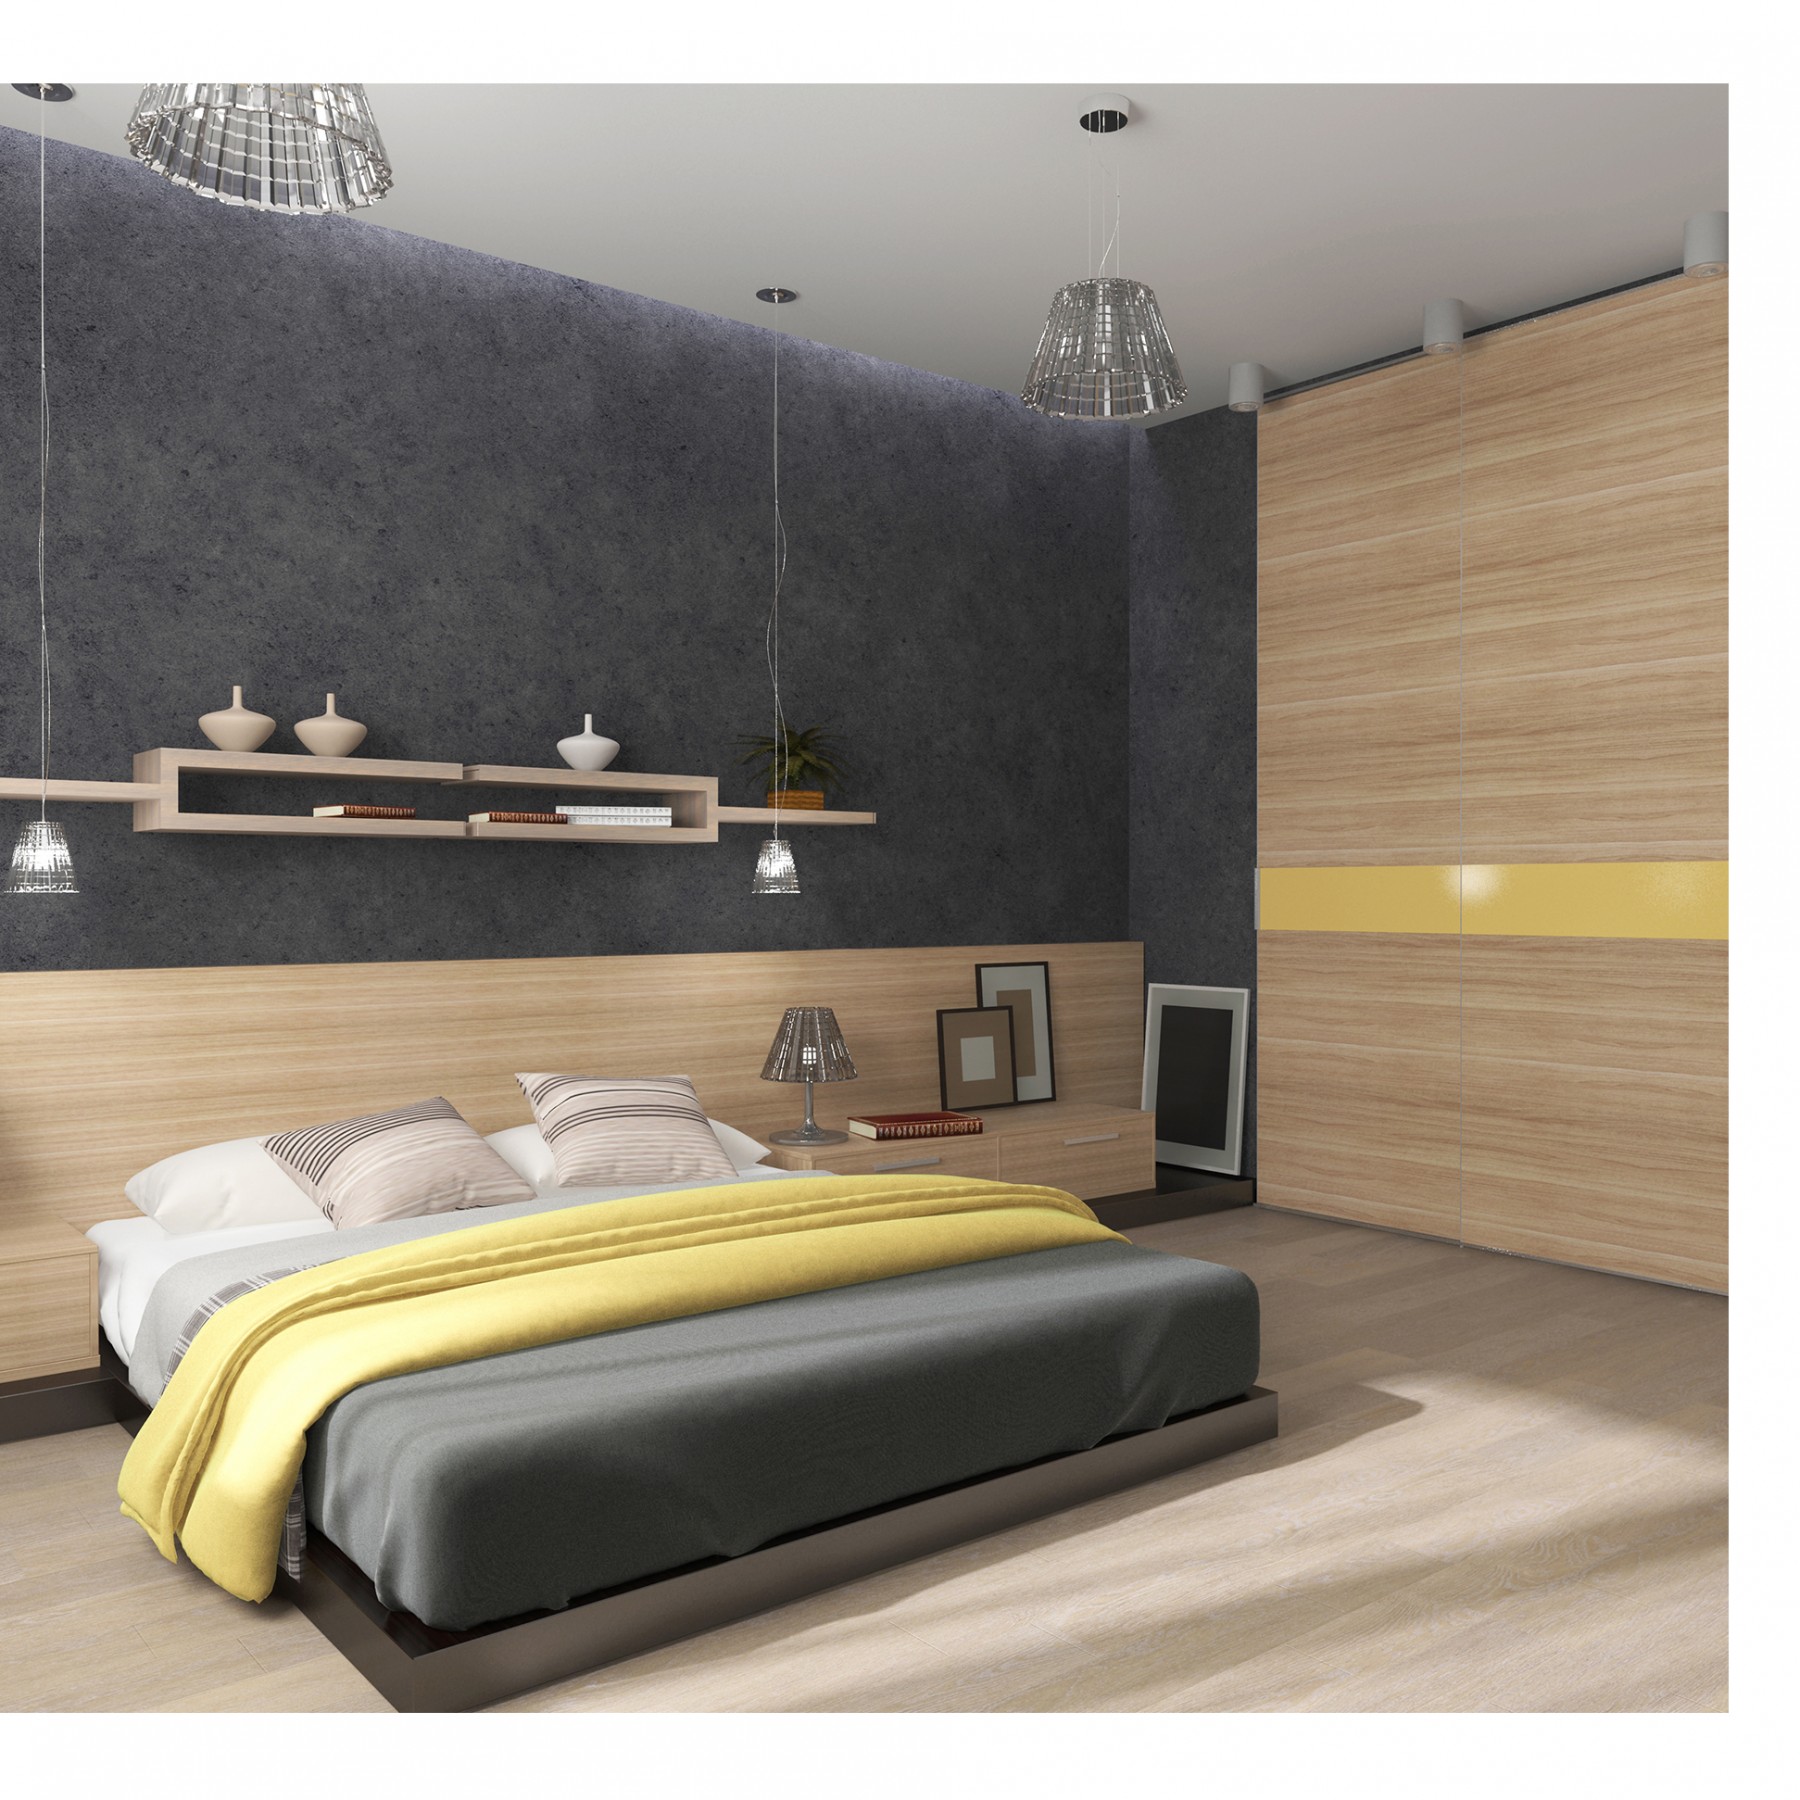 6 Gorgeous Bedroom Interior Design Schemes